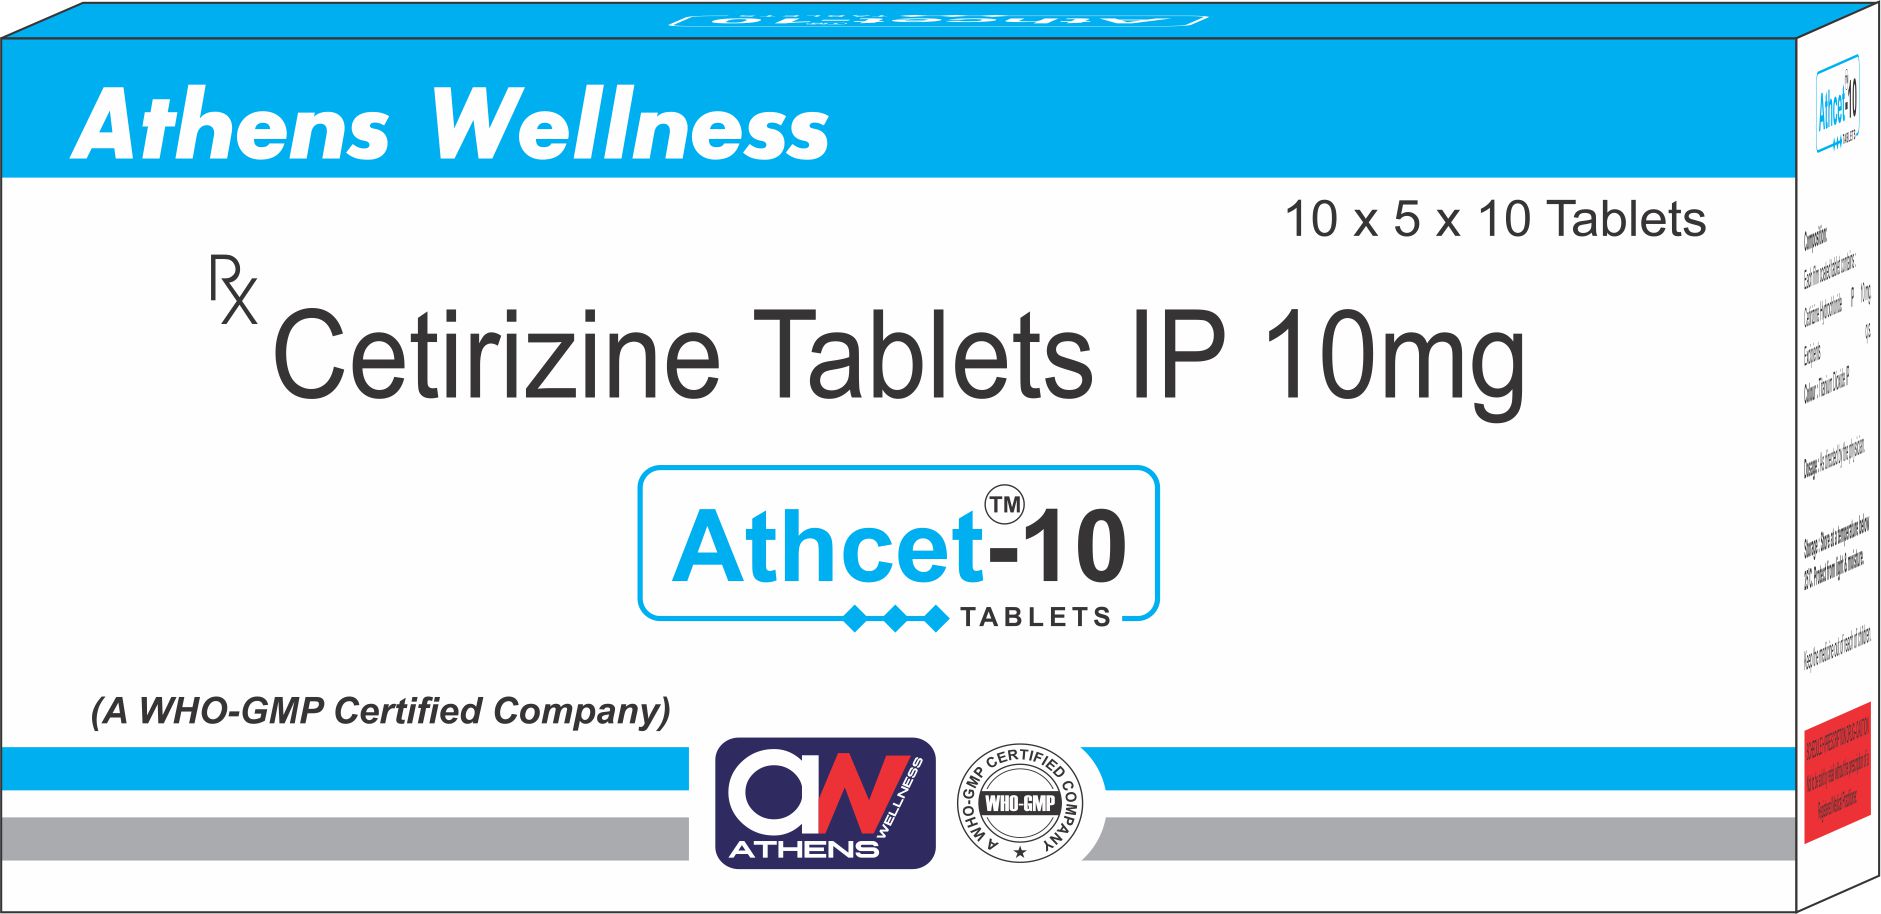 ATHCET - 10 TABLETS